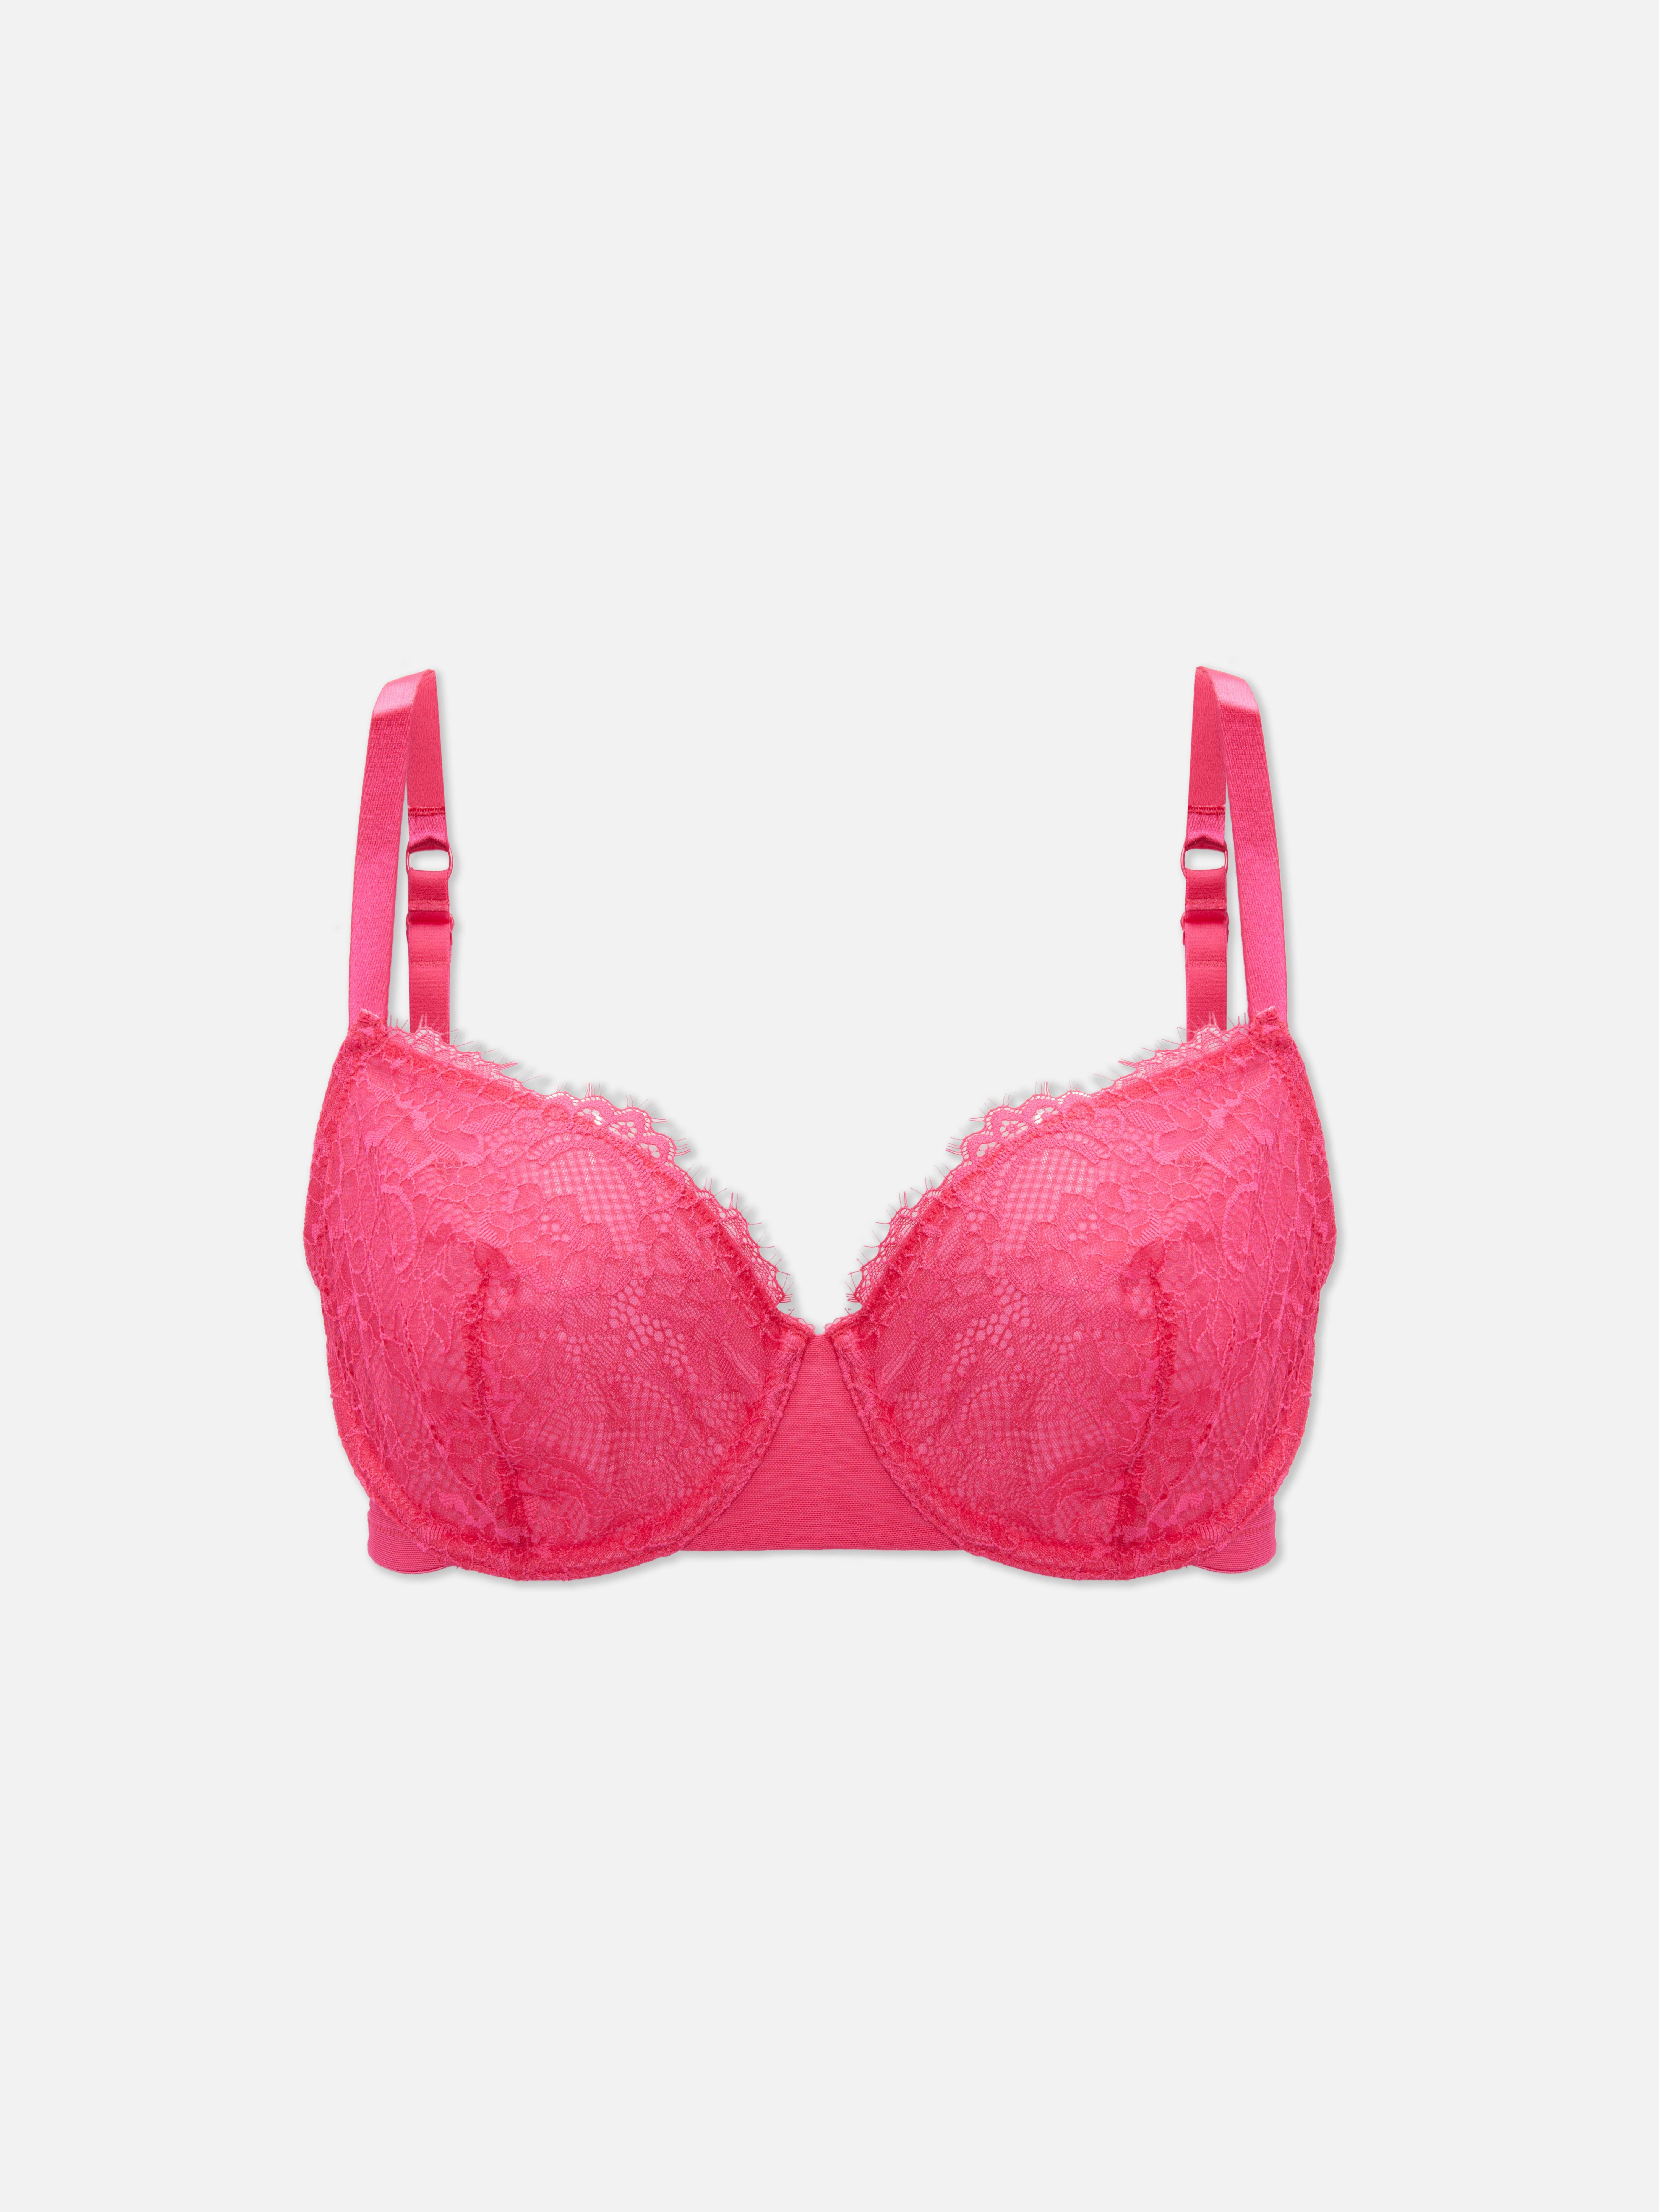 PRIMARK LADIES NON Wired Rose Pink Lace Bralette. Bra Size 34C. BNWT. £0.99  - PicClick UK